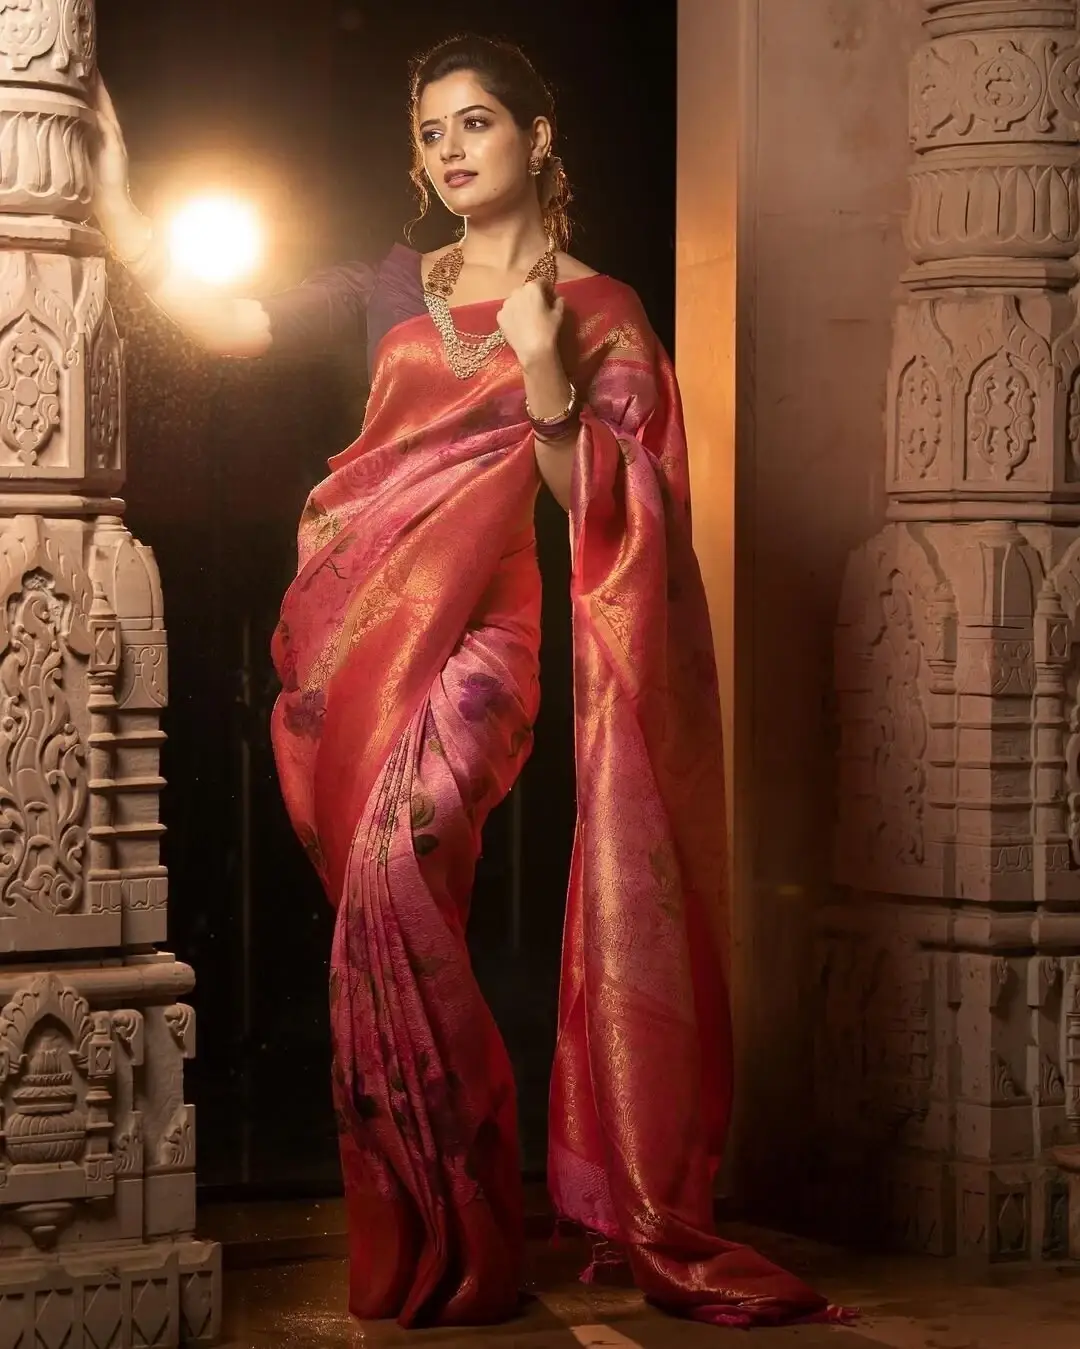 SOUTH INDIAN MODEL ASHIKA RANGANATH PHOTOSHOOT IN RED SAREE 4